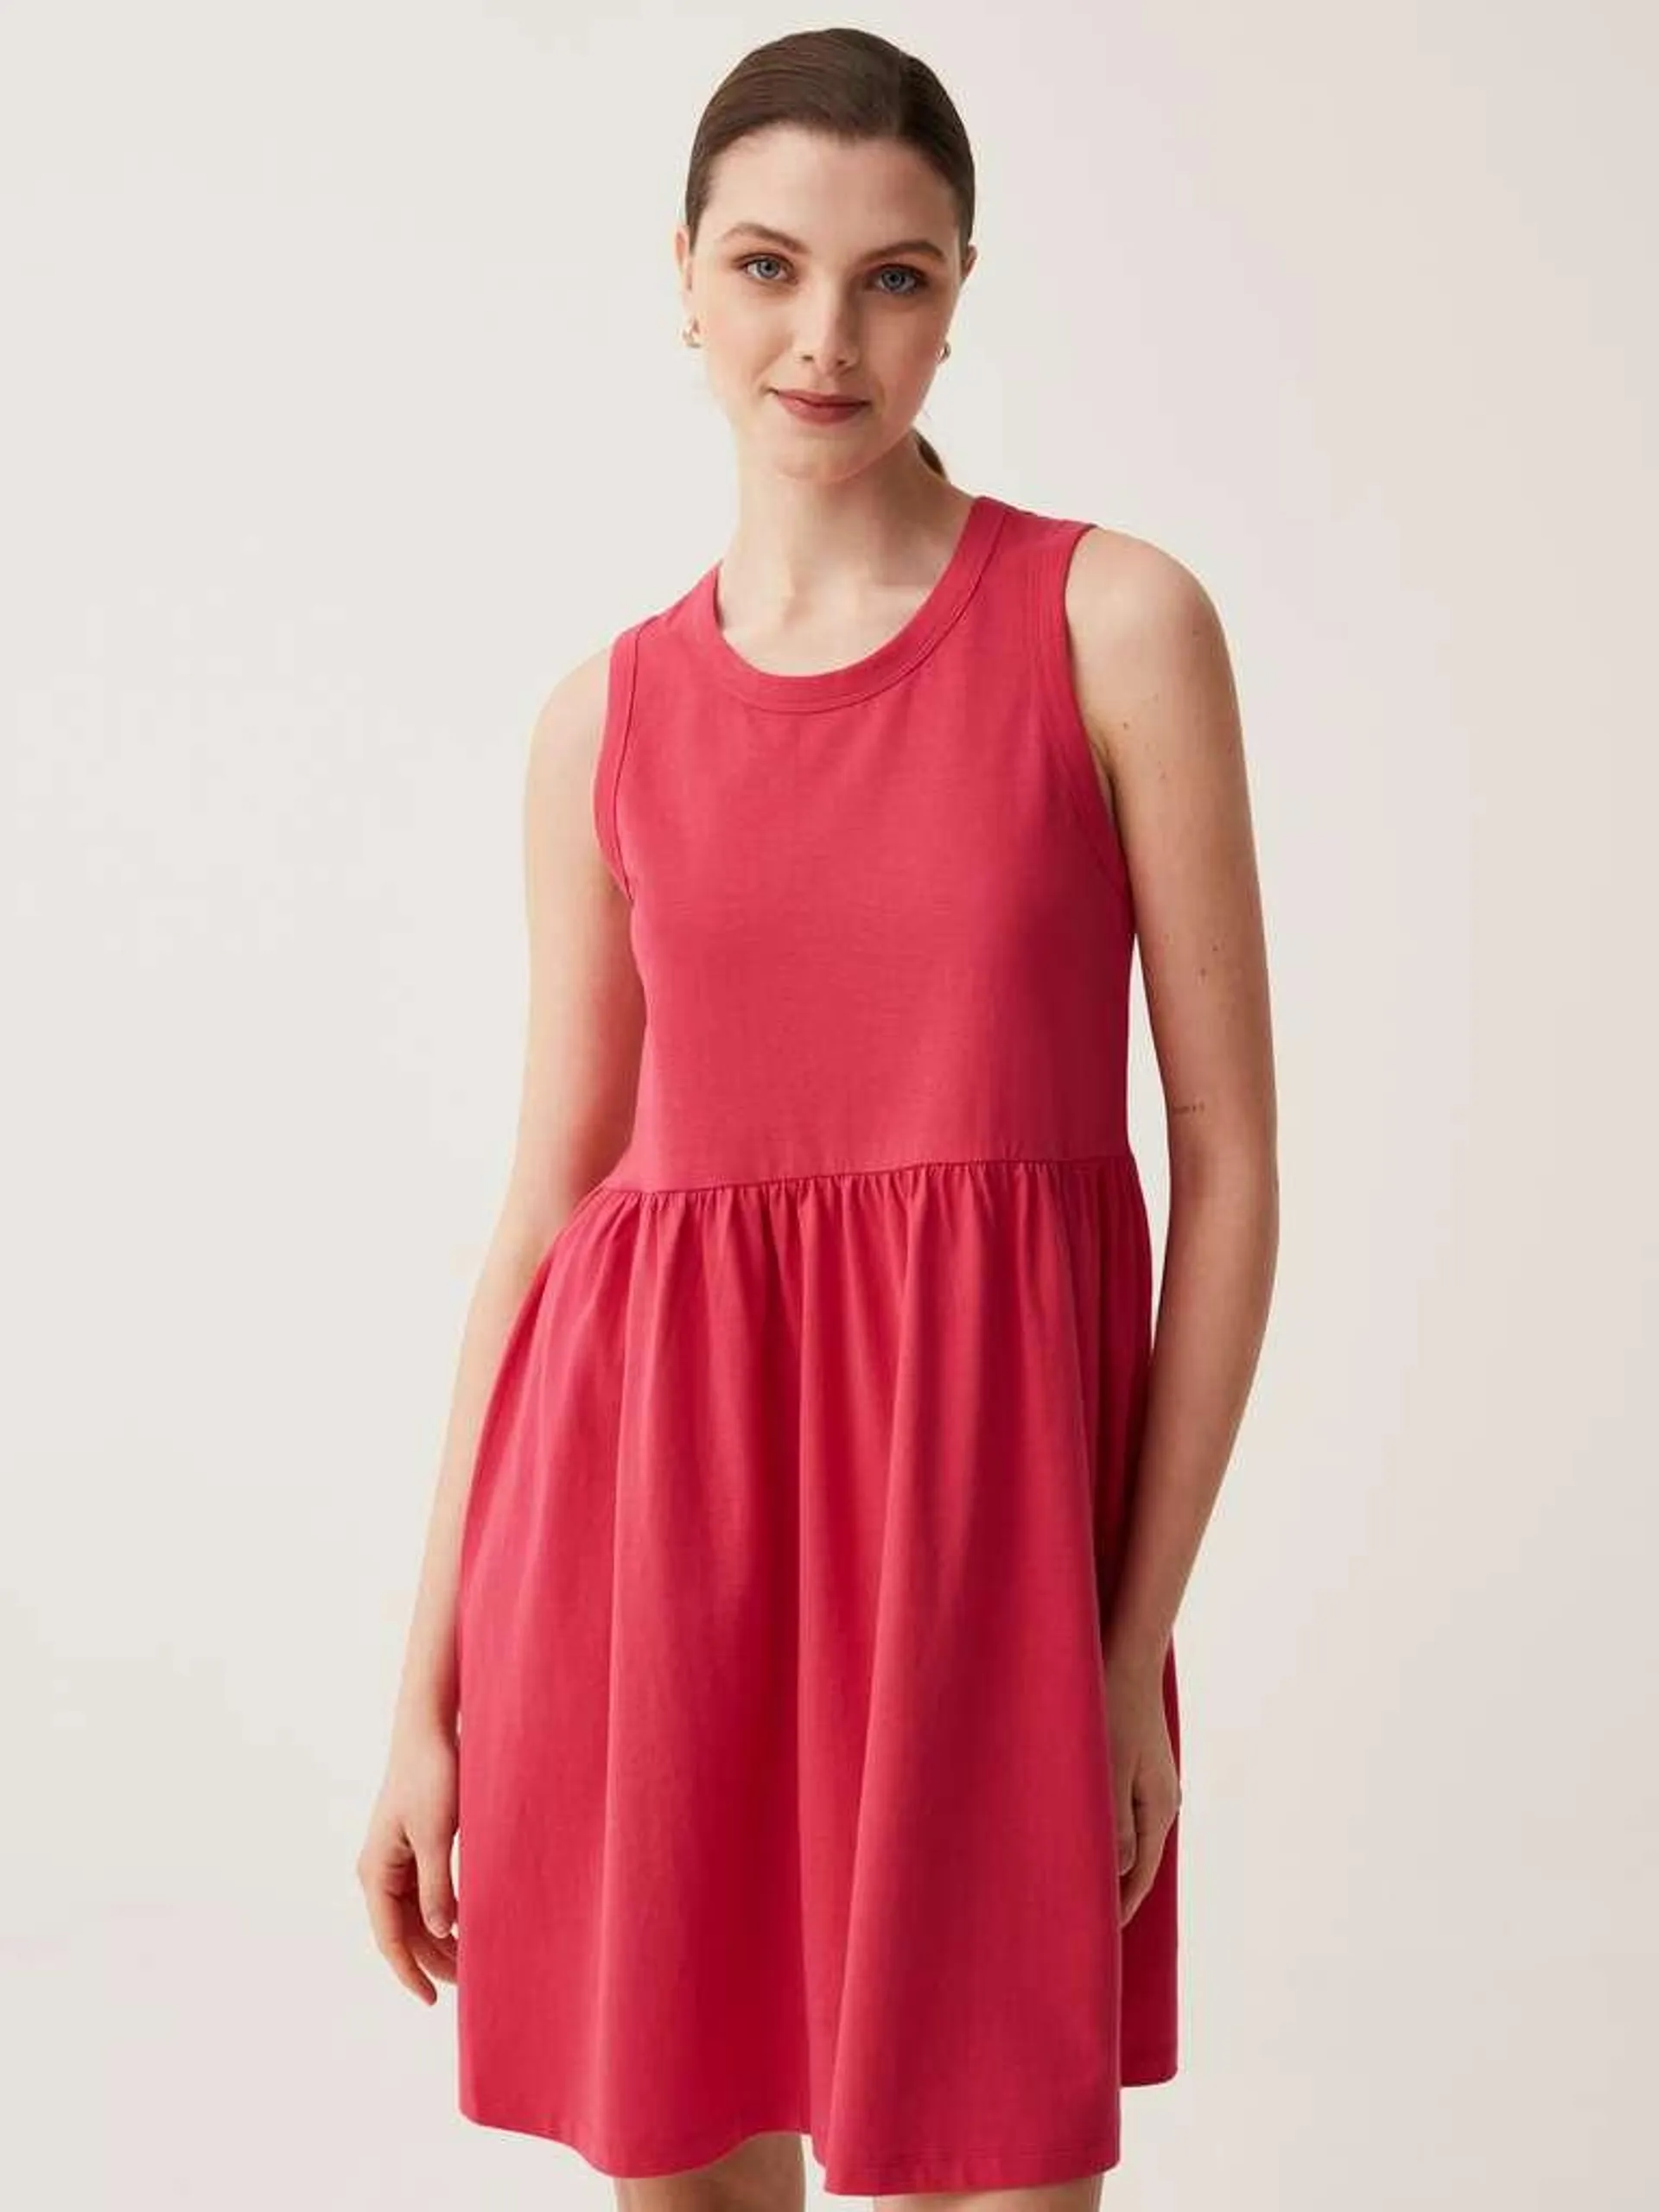 Fuchsia Short sleeveless dress in cotton